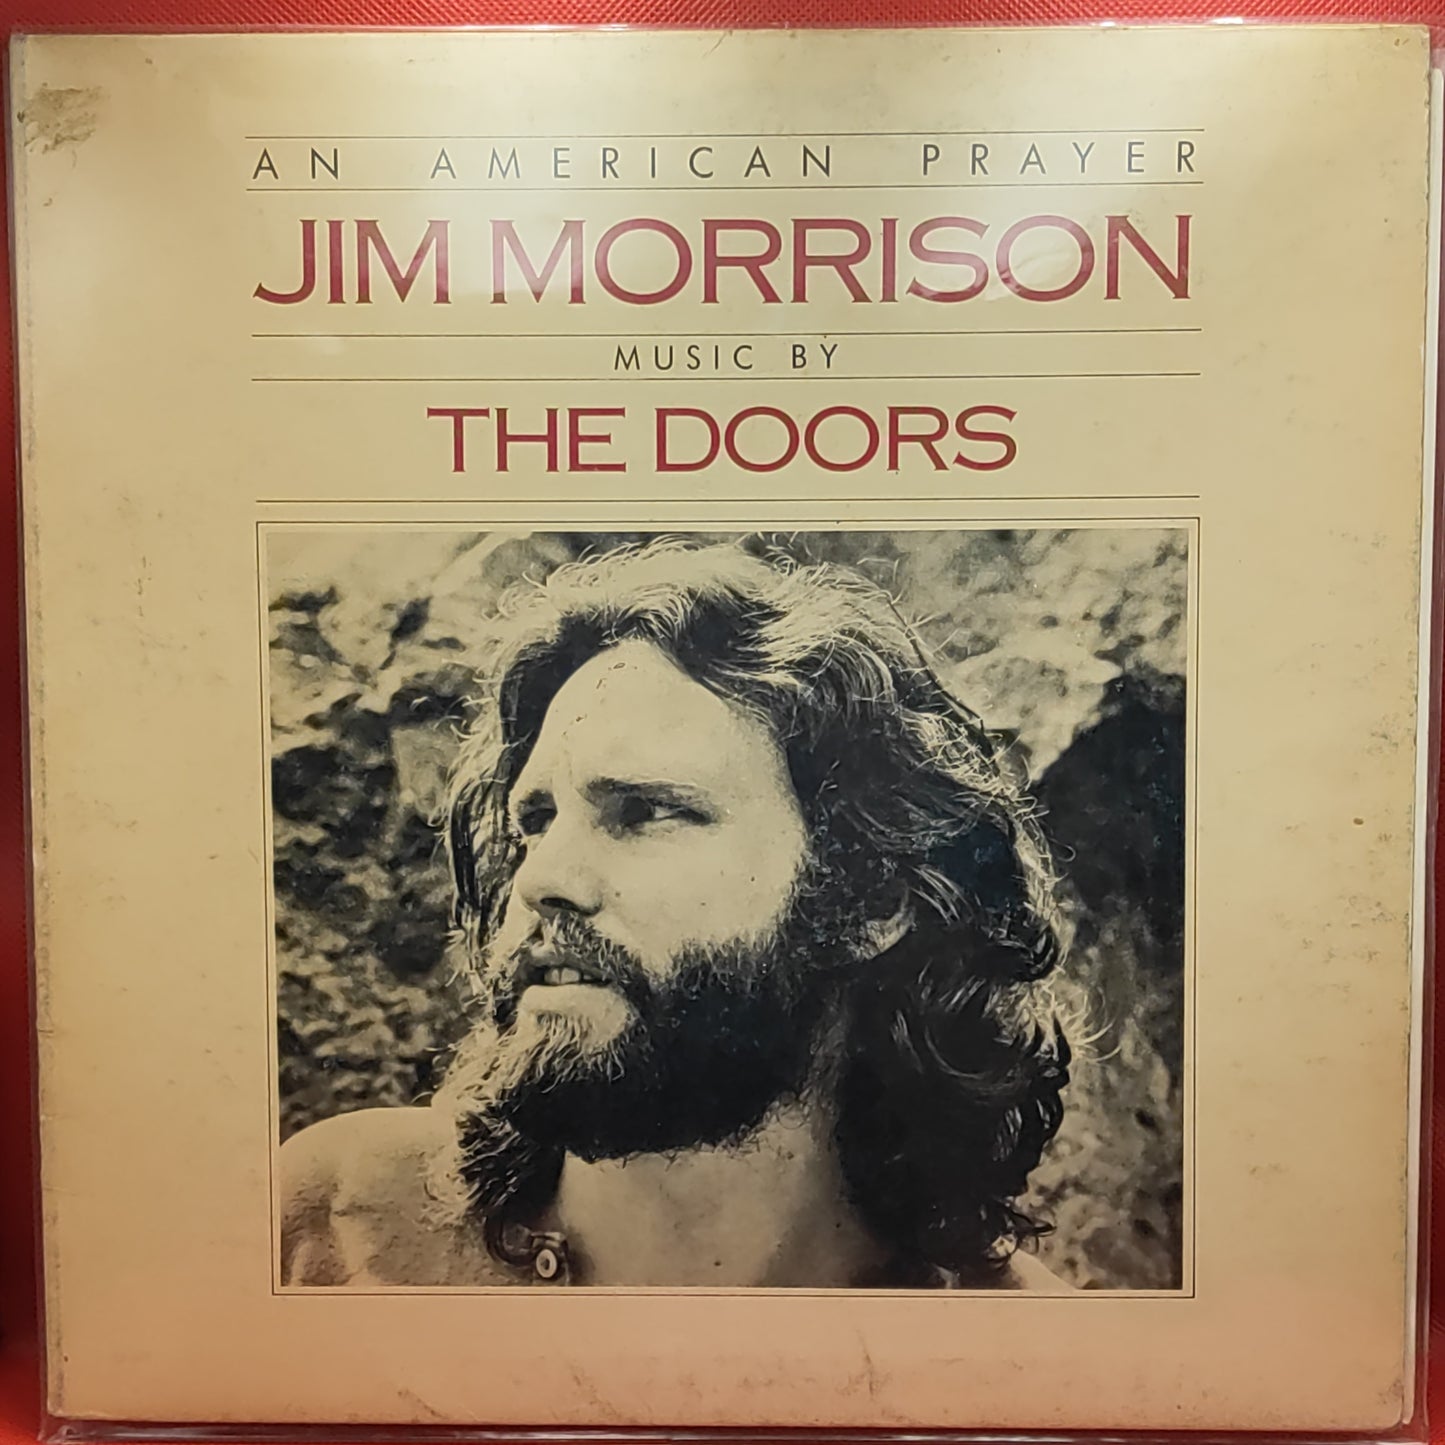 Jim Morrison Music By The Doors – An American Prayer